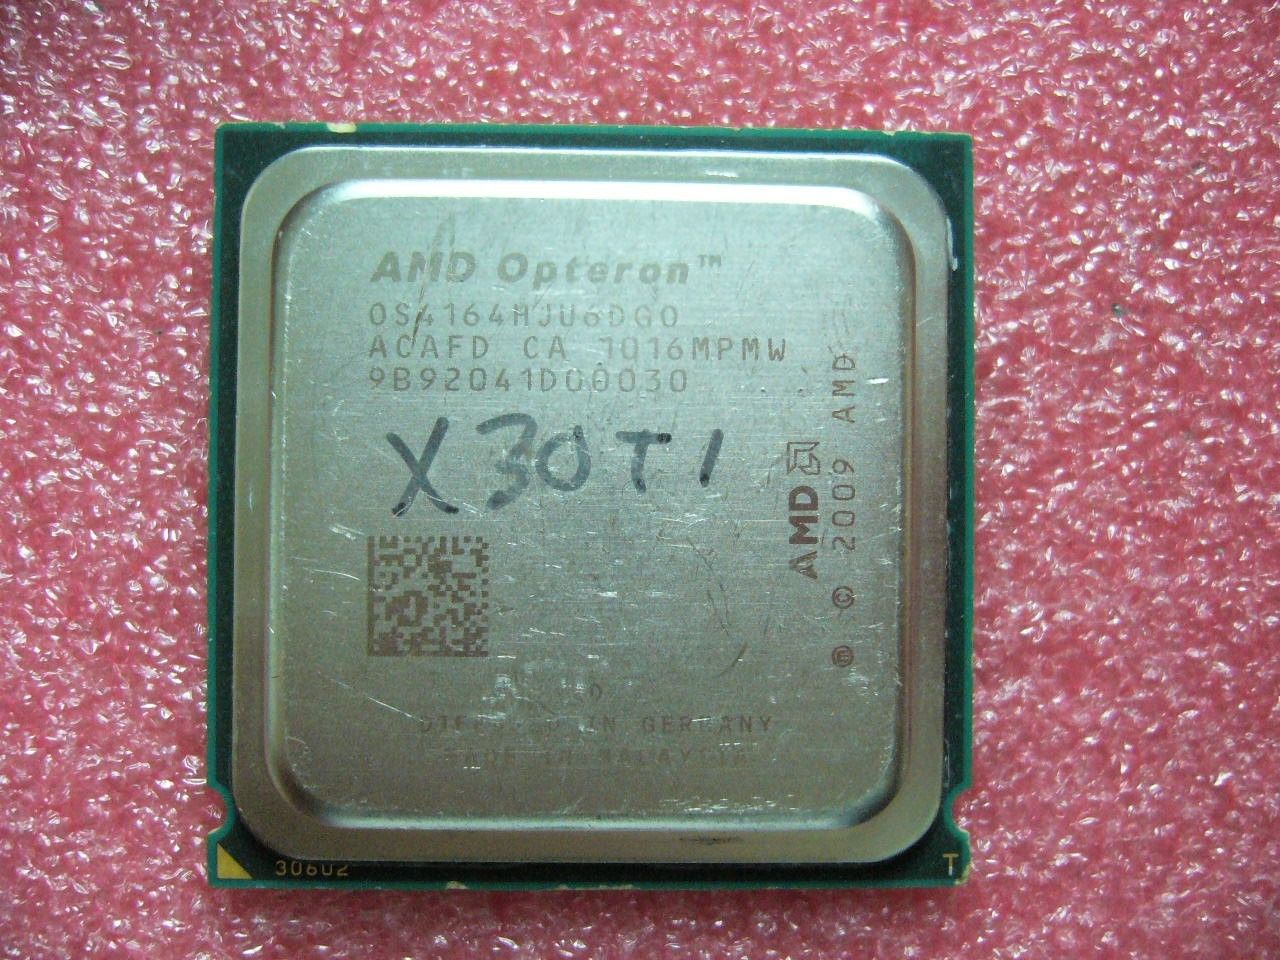 QTY 1x AMD Opteron 4164 EE 1.8 GHz Six Core (OS4164HJU6DGO) CPU Socket C32 - zum Schließen ins Bild klicken